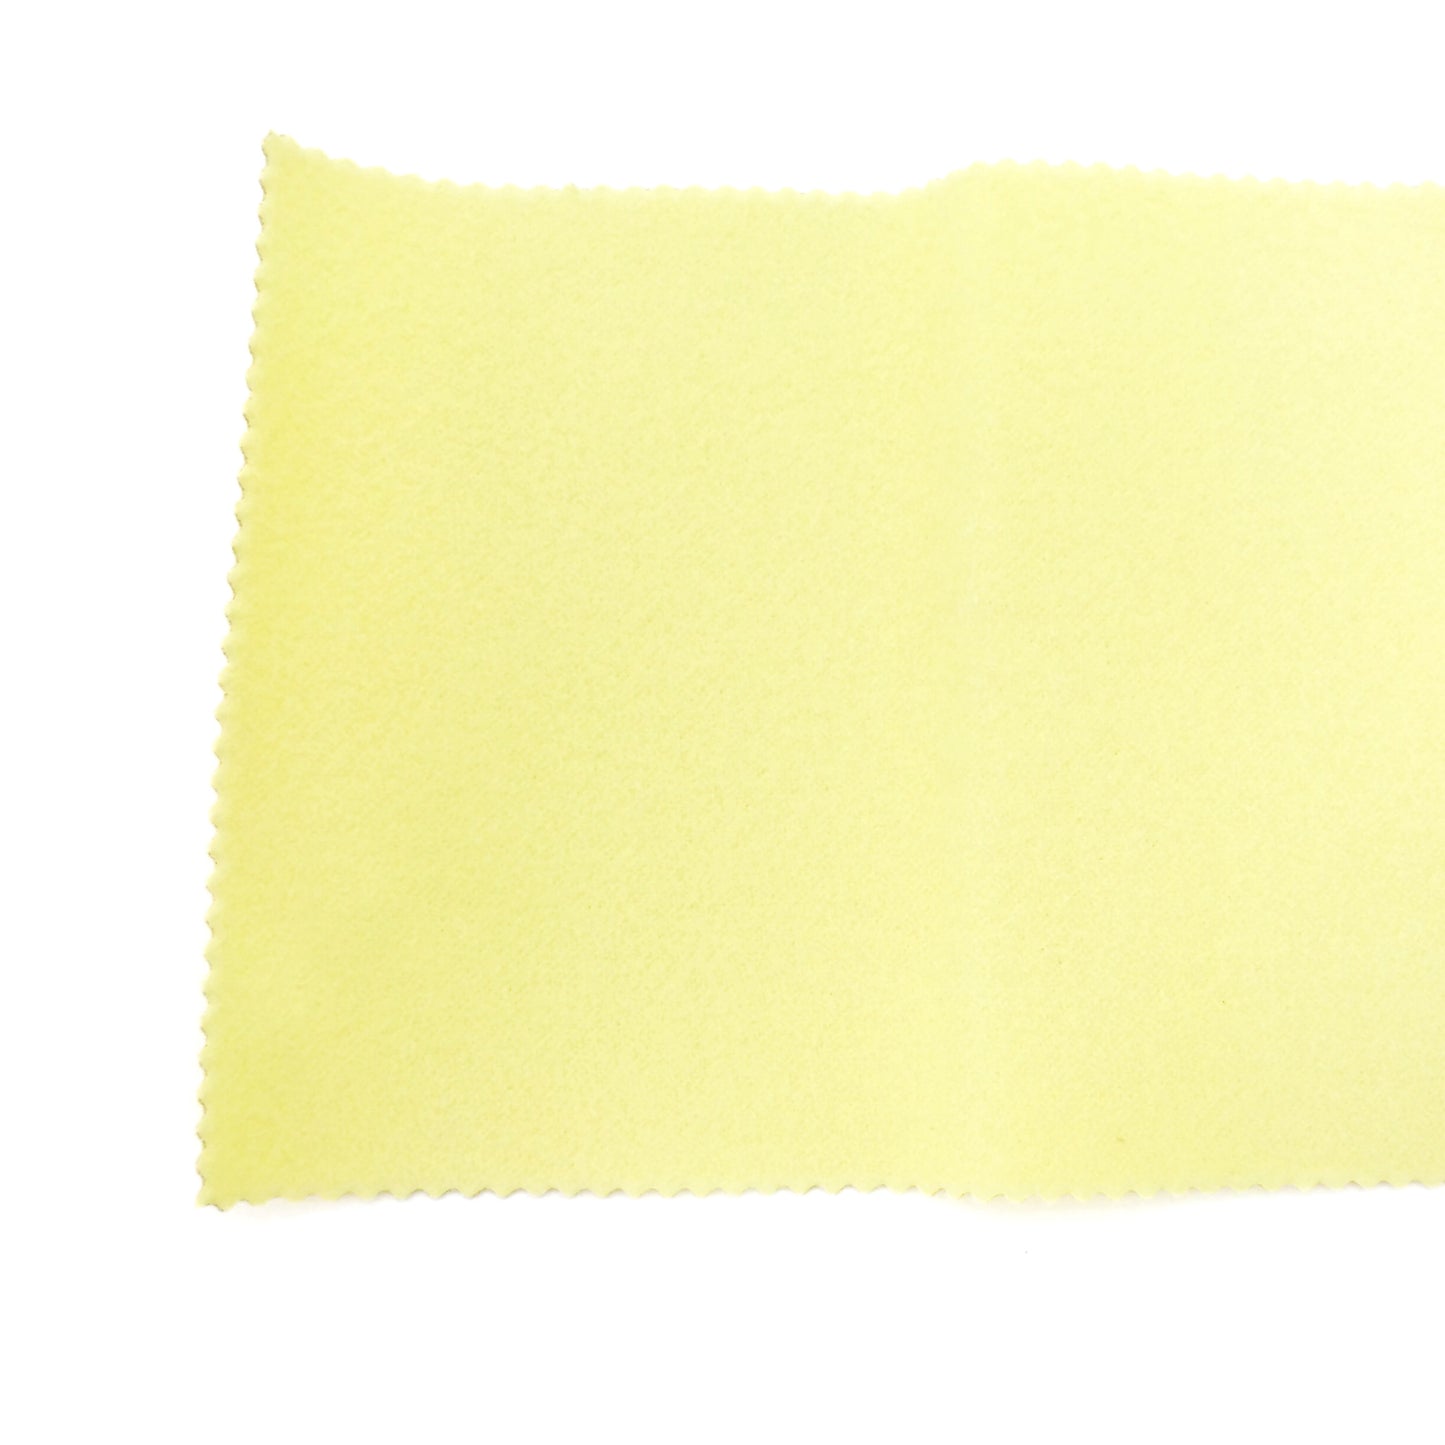 Yellow Polishing Cloth - for Shiny Clean Jewelry! (TLA5)